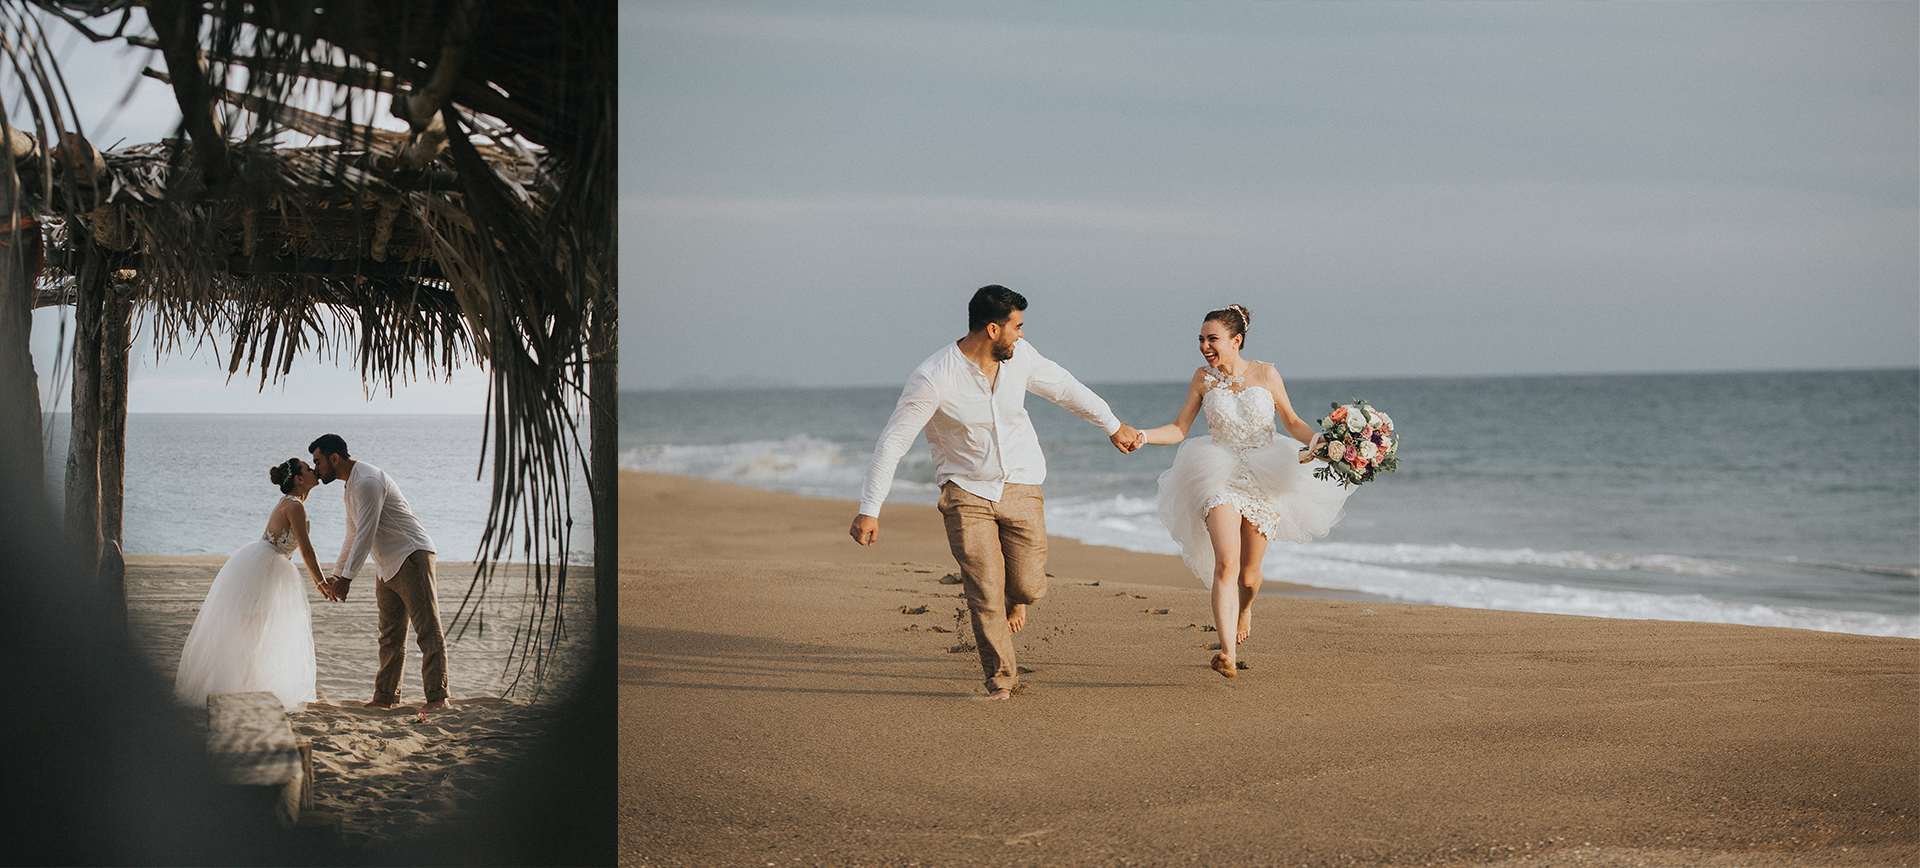 tulum elopement package mexico beach adventure wedding